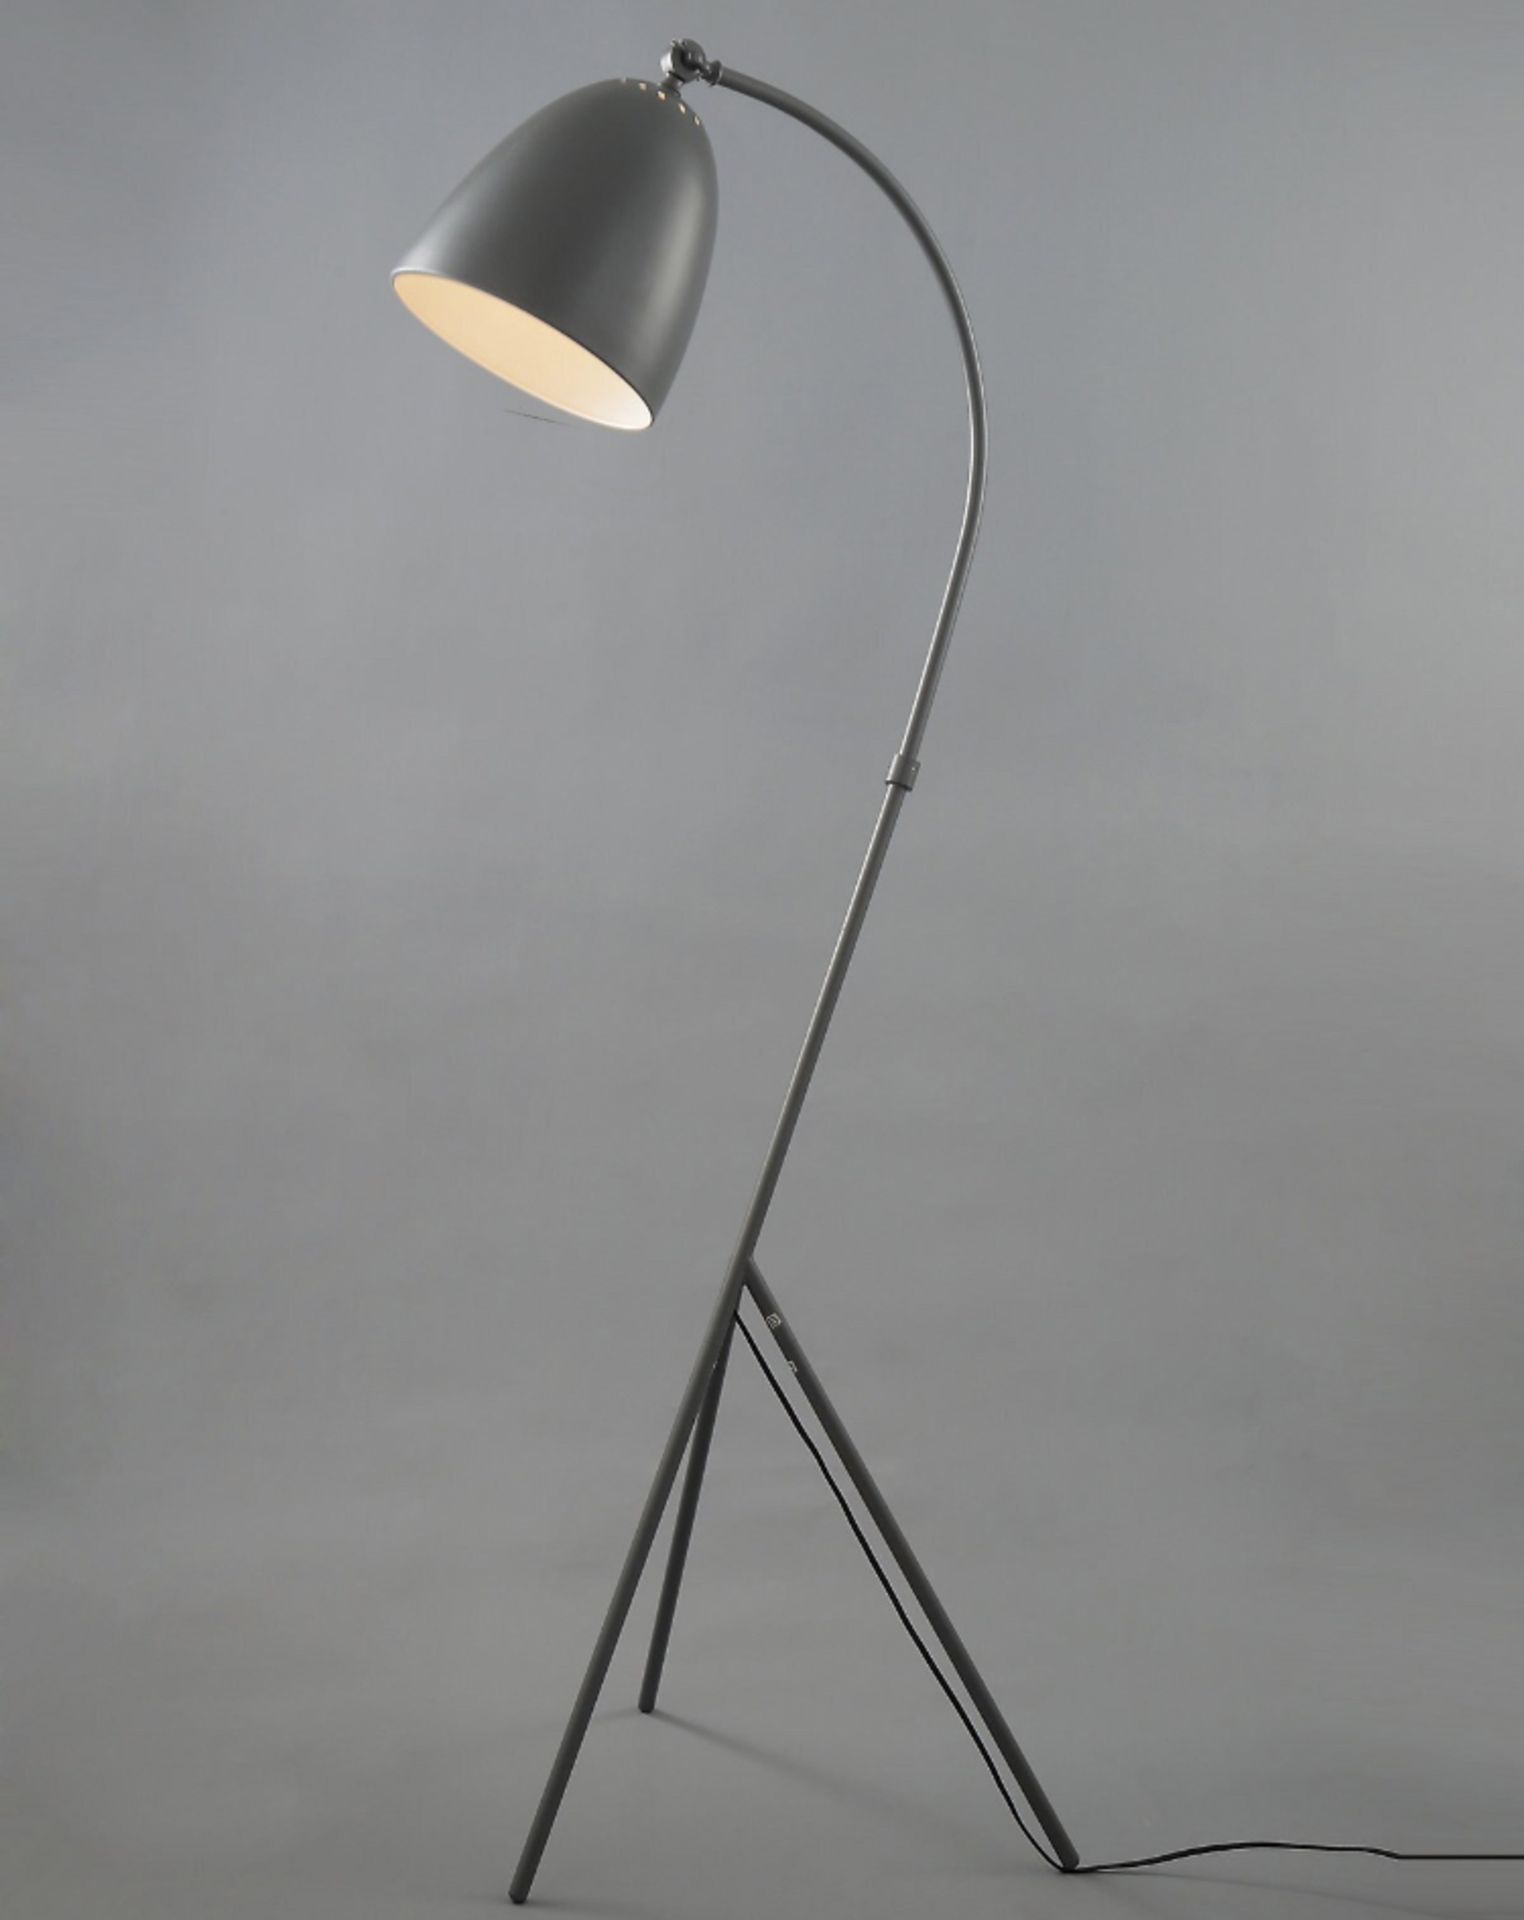 Loft Leaning Tripod Floor Lamp RRP £95